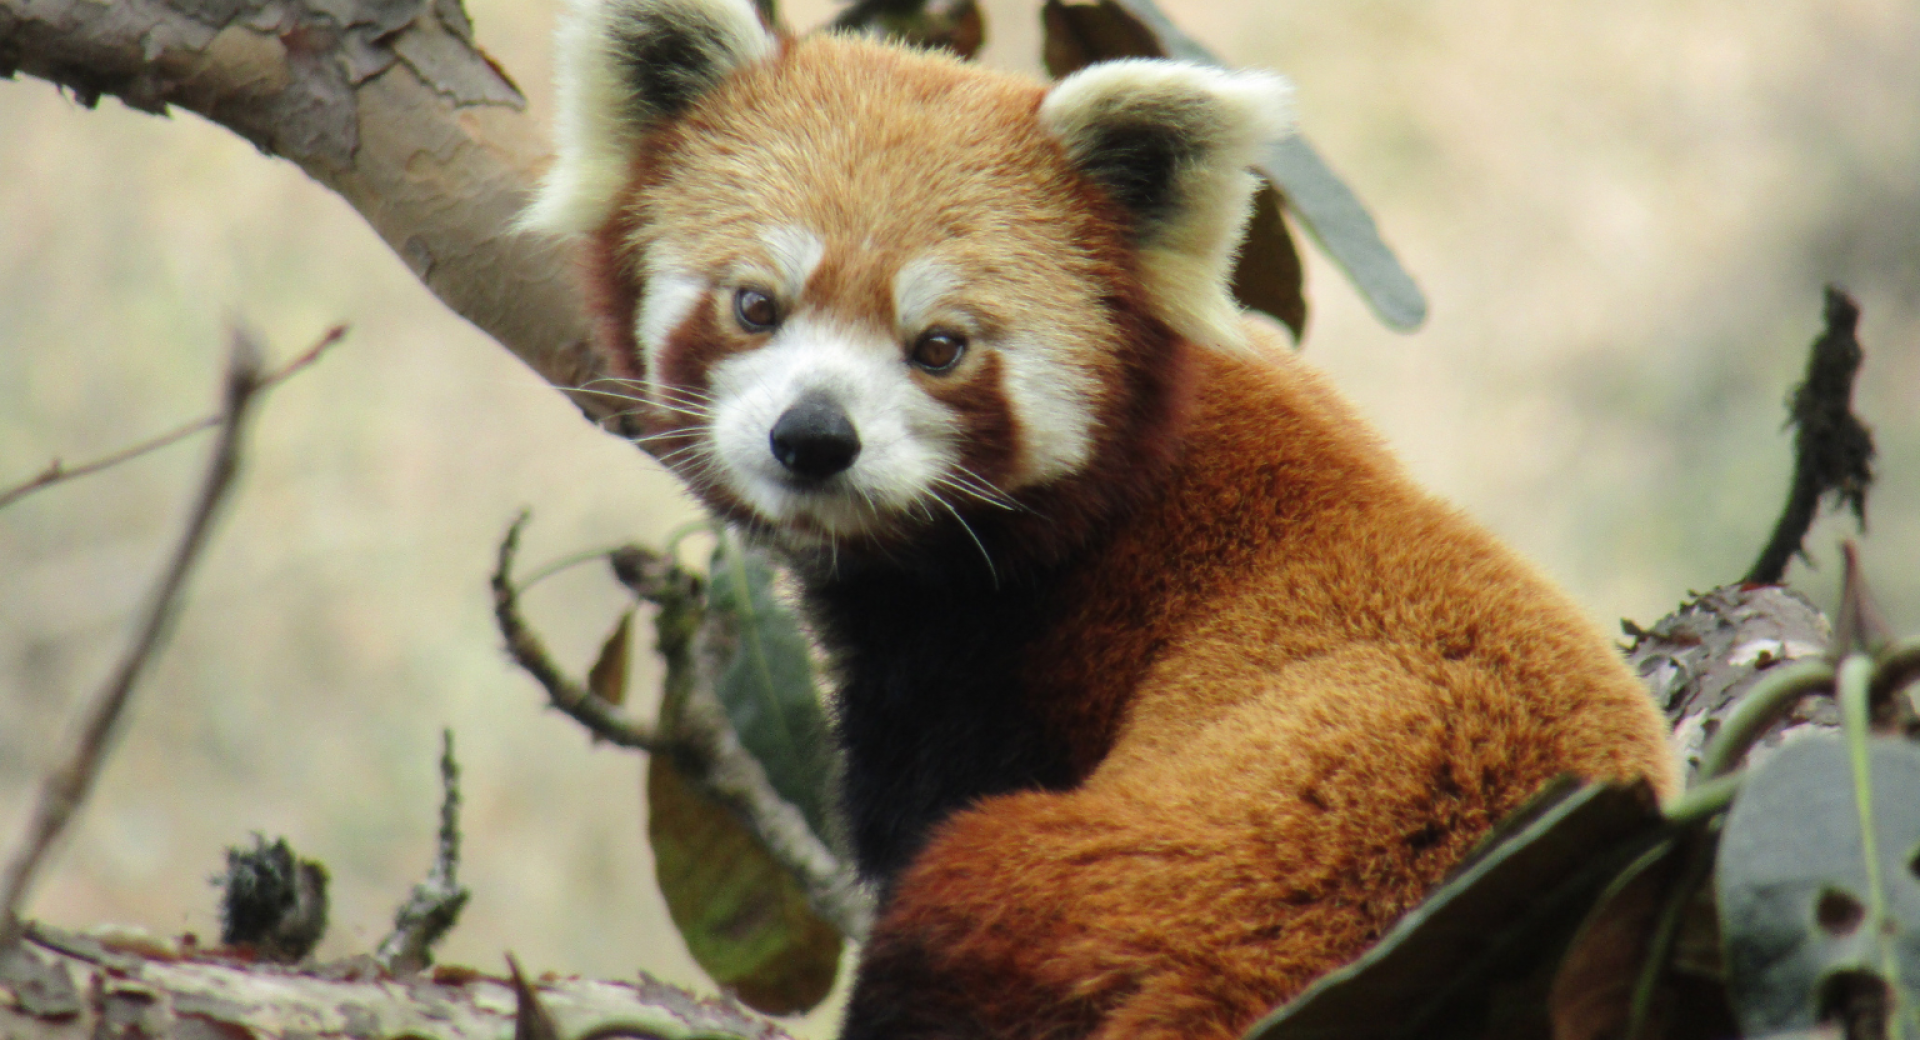 Planting Trees to Save Red Pandas